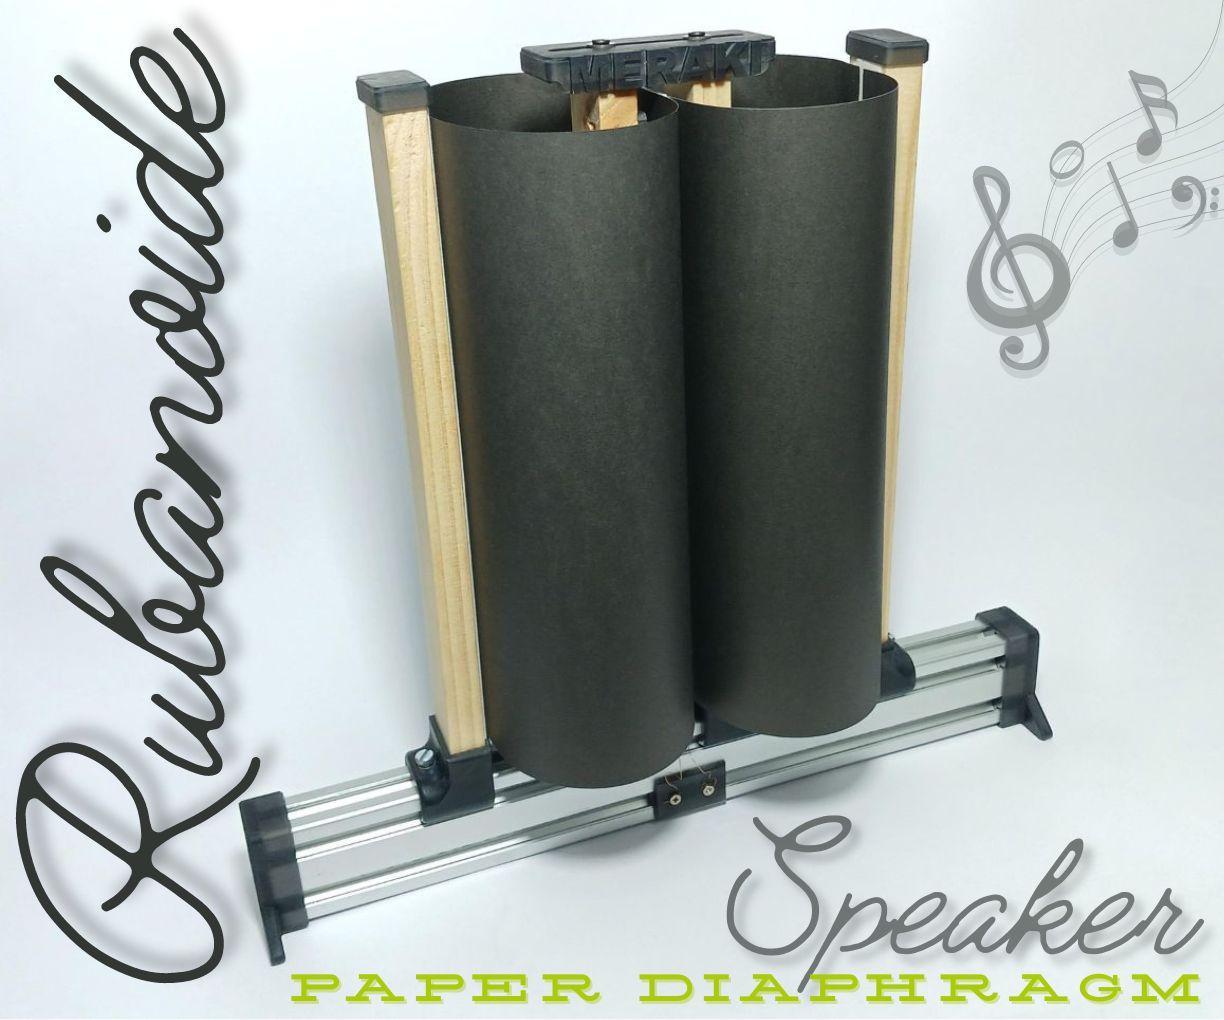 Create Your Own Paper Diaphragm Rubanoide Speakers!